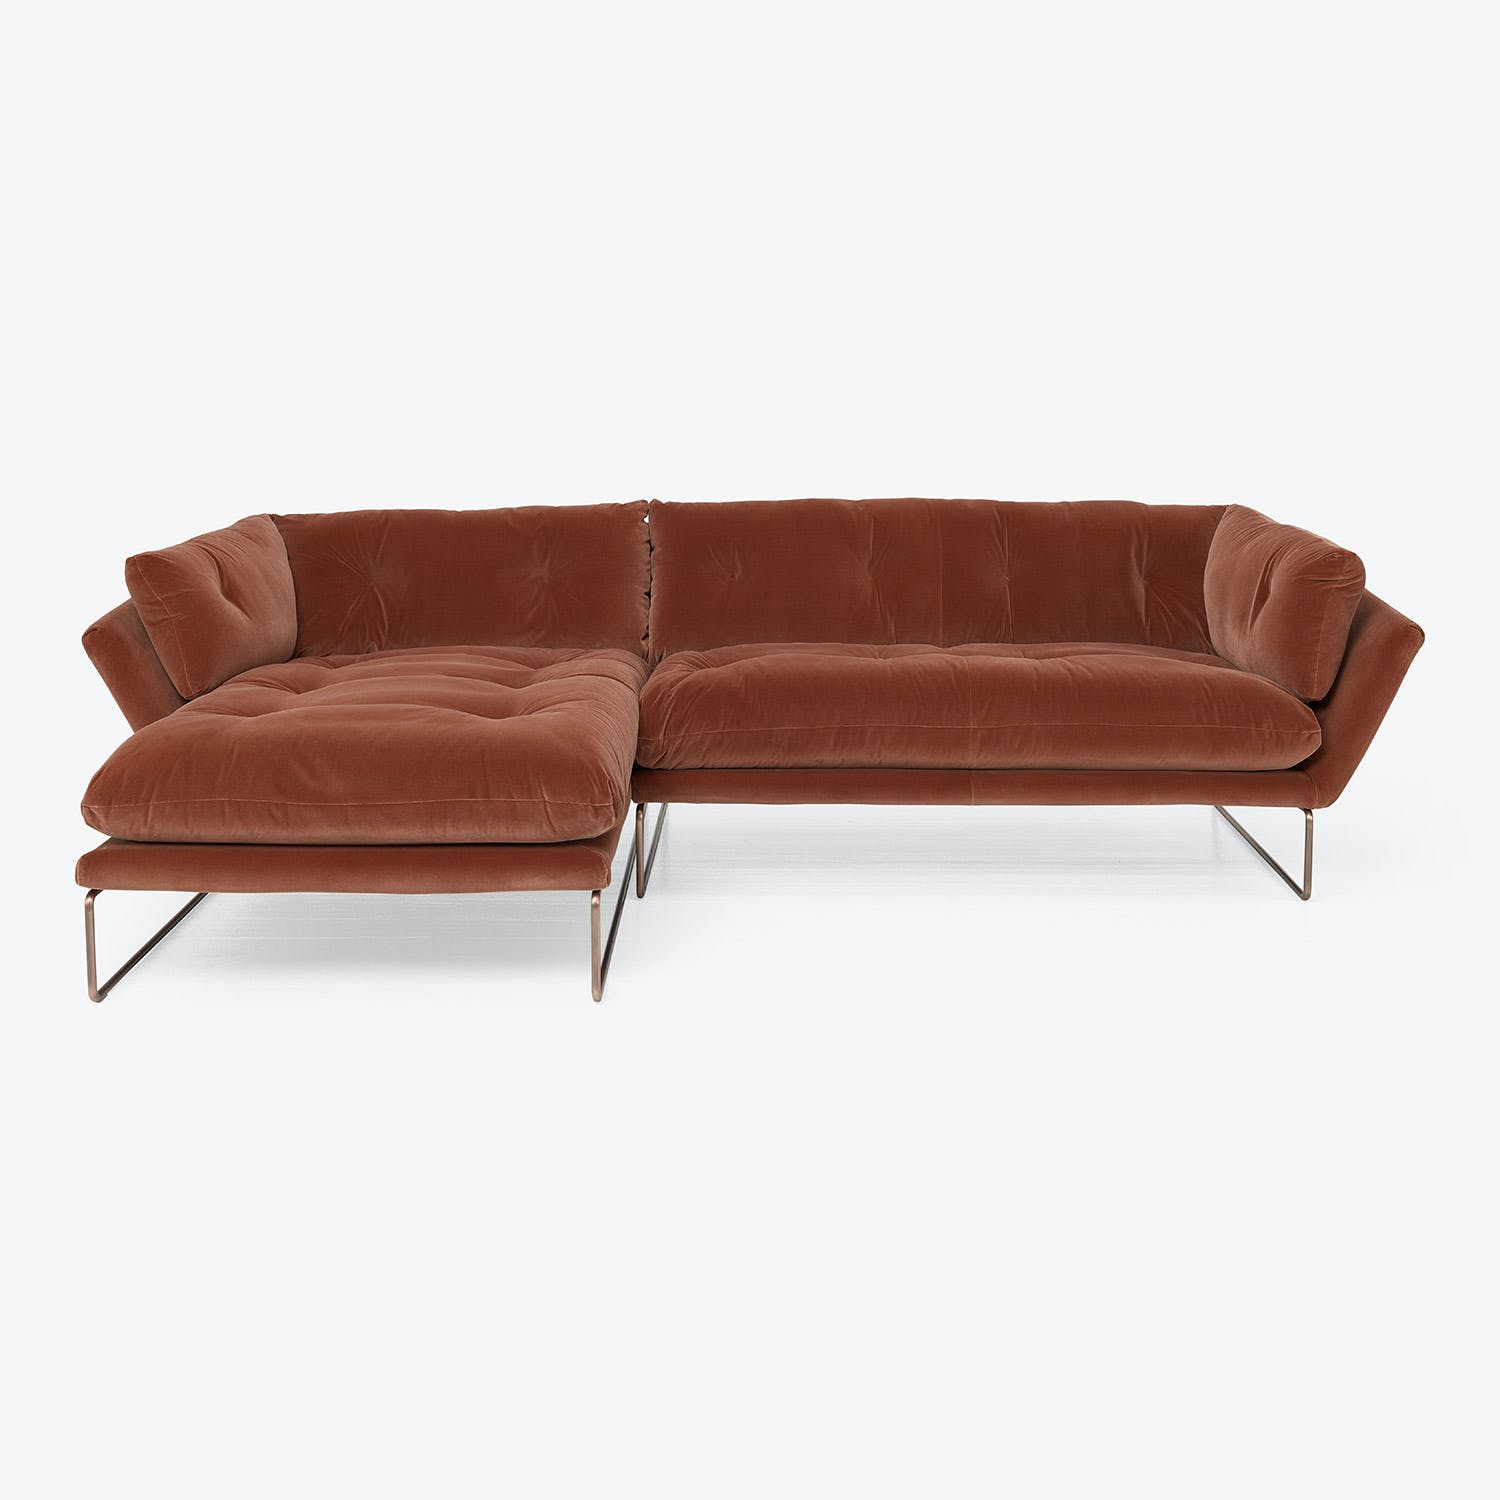 Modern corner sectional sofa with luxurious velvet upholstery in brown.